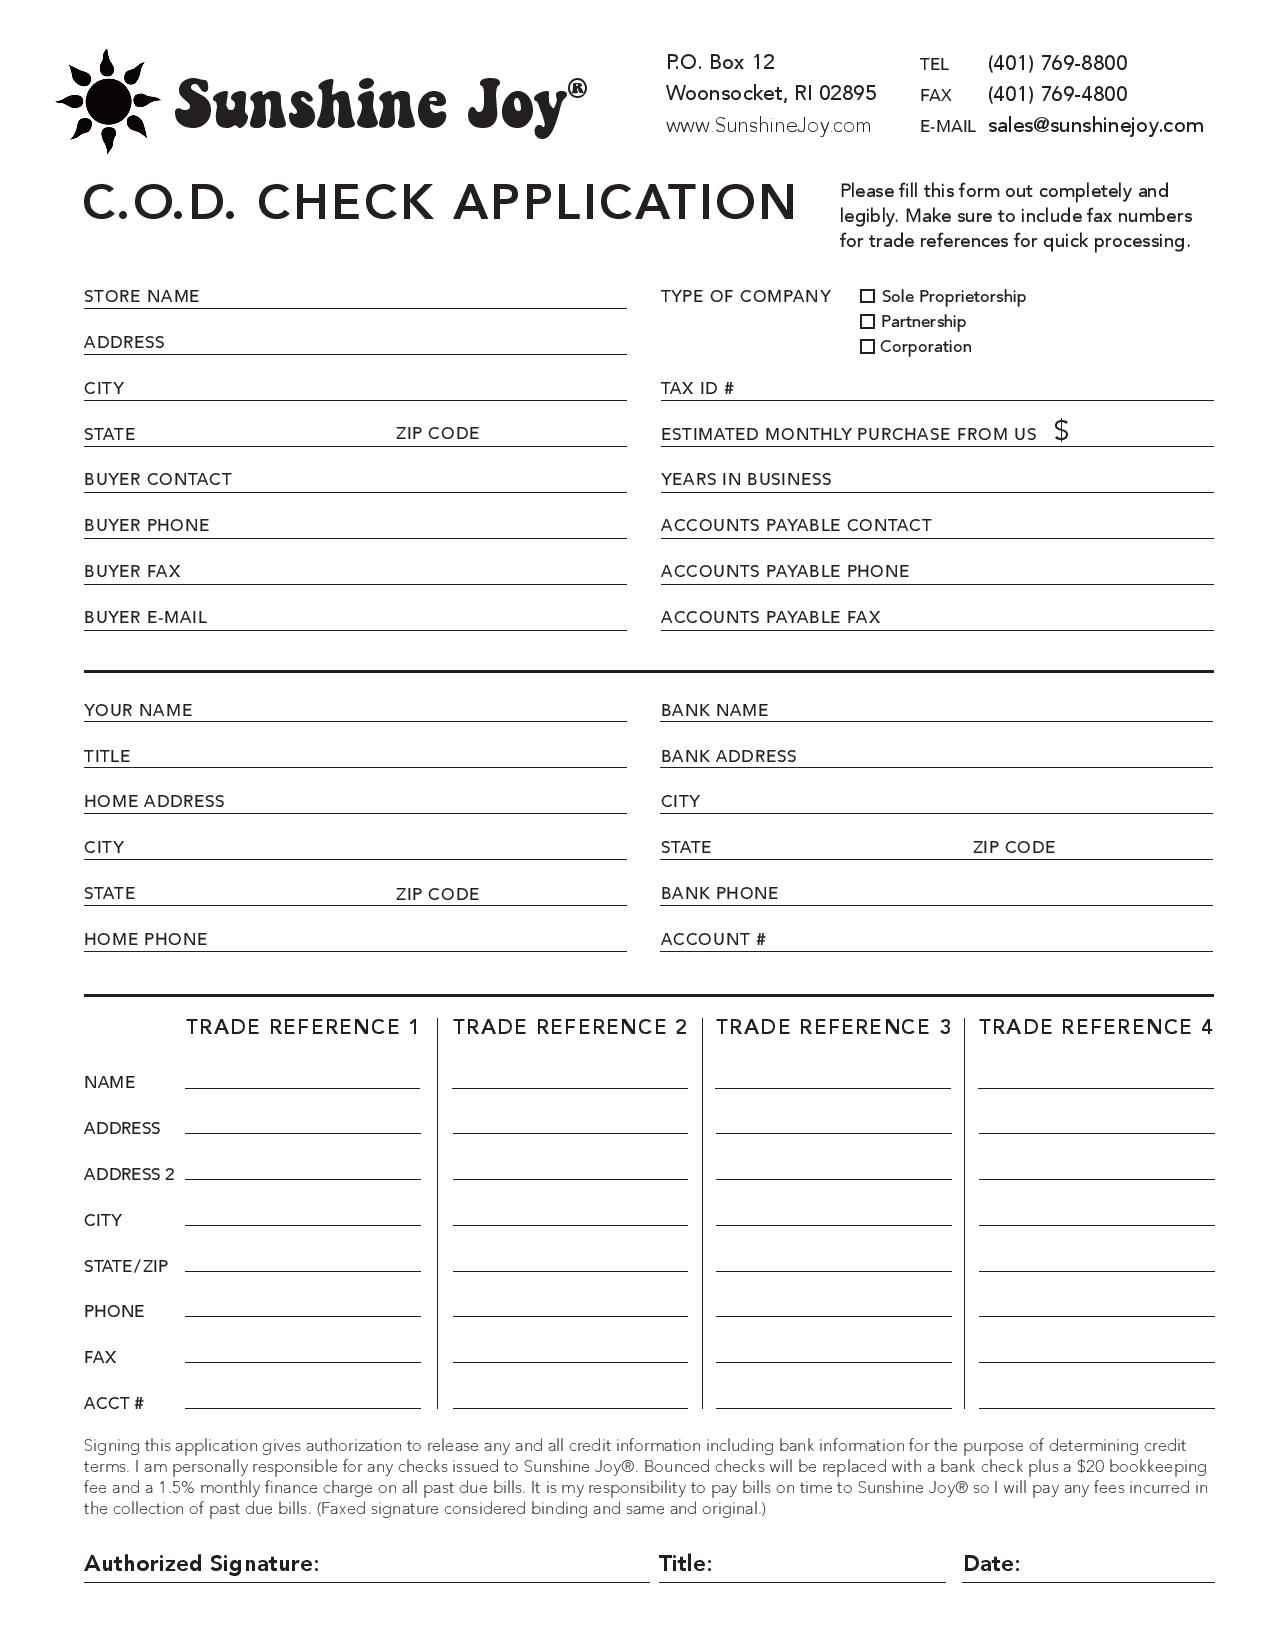 COD Company Check Application Form